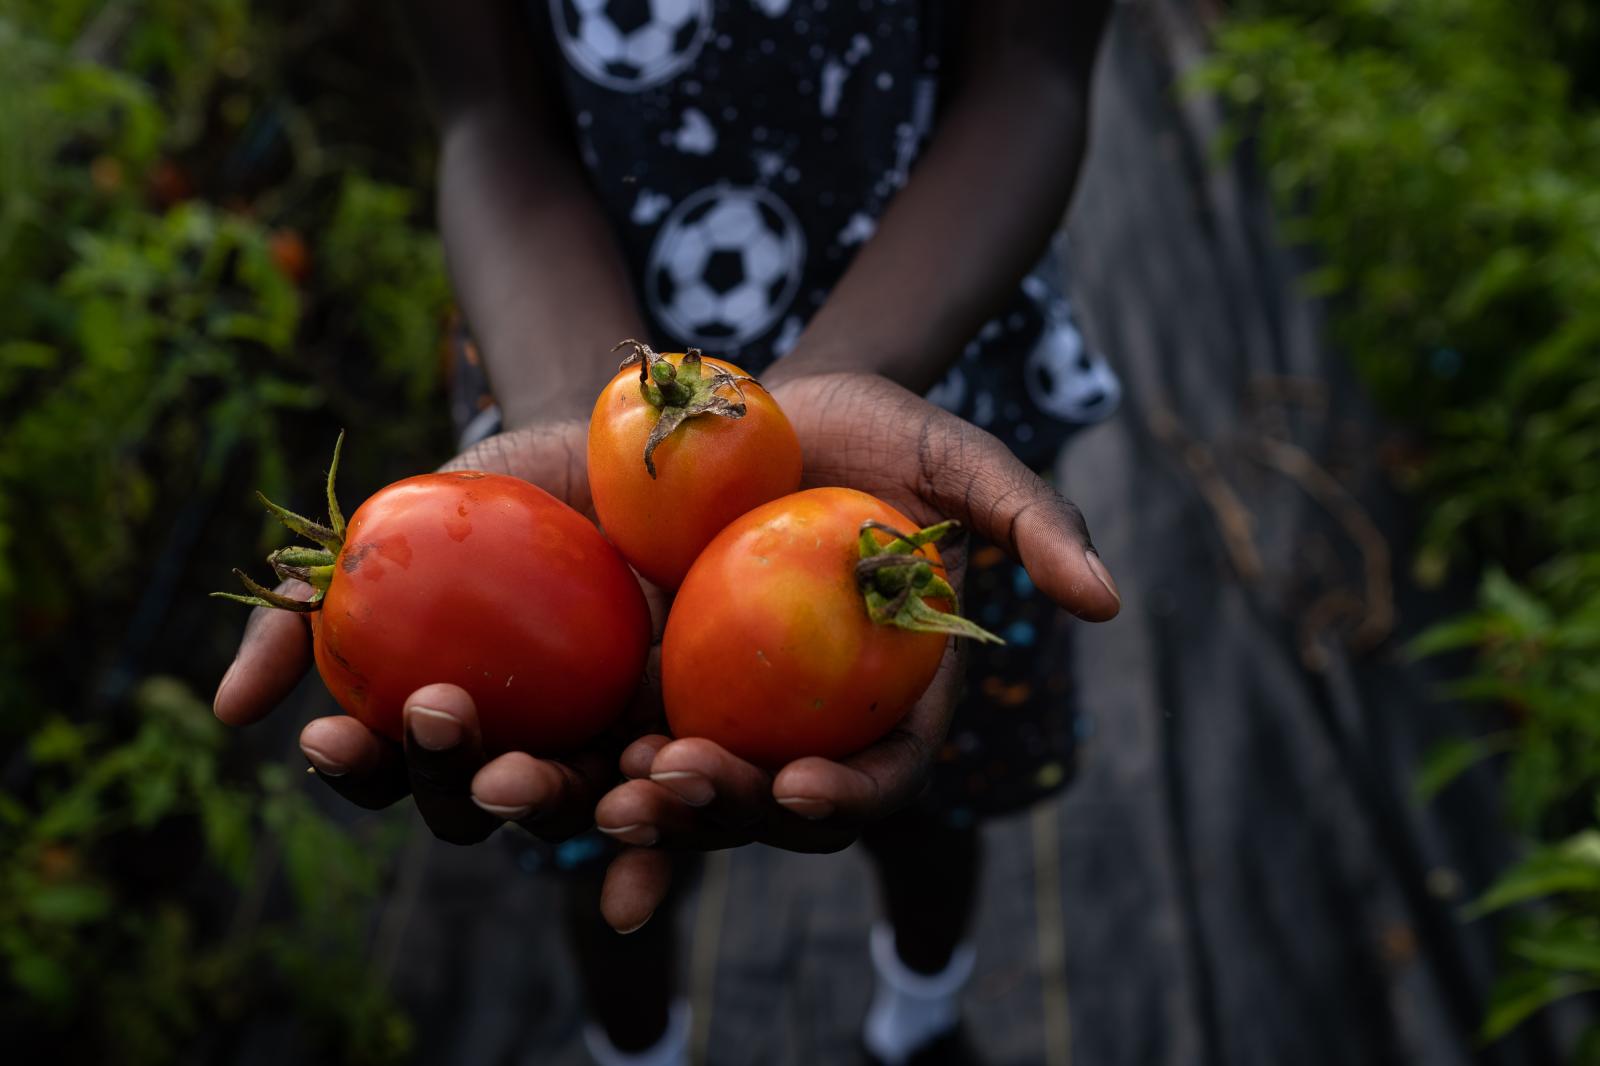 Freshly picked tomatoes from the Brady Family Farm. Syracuse, New York.